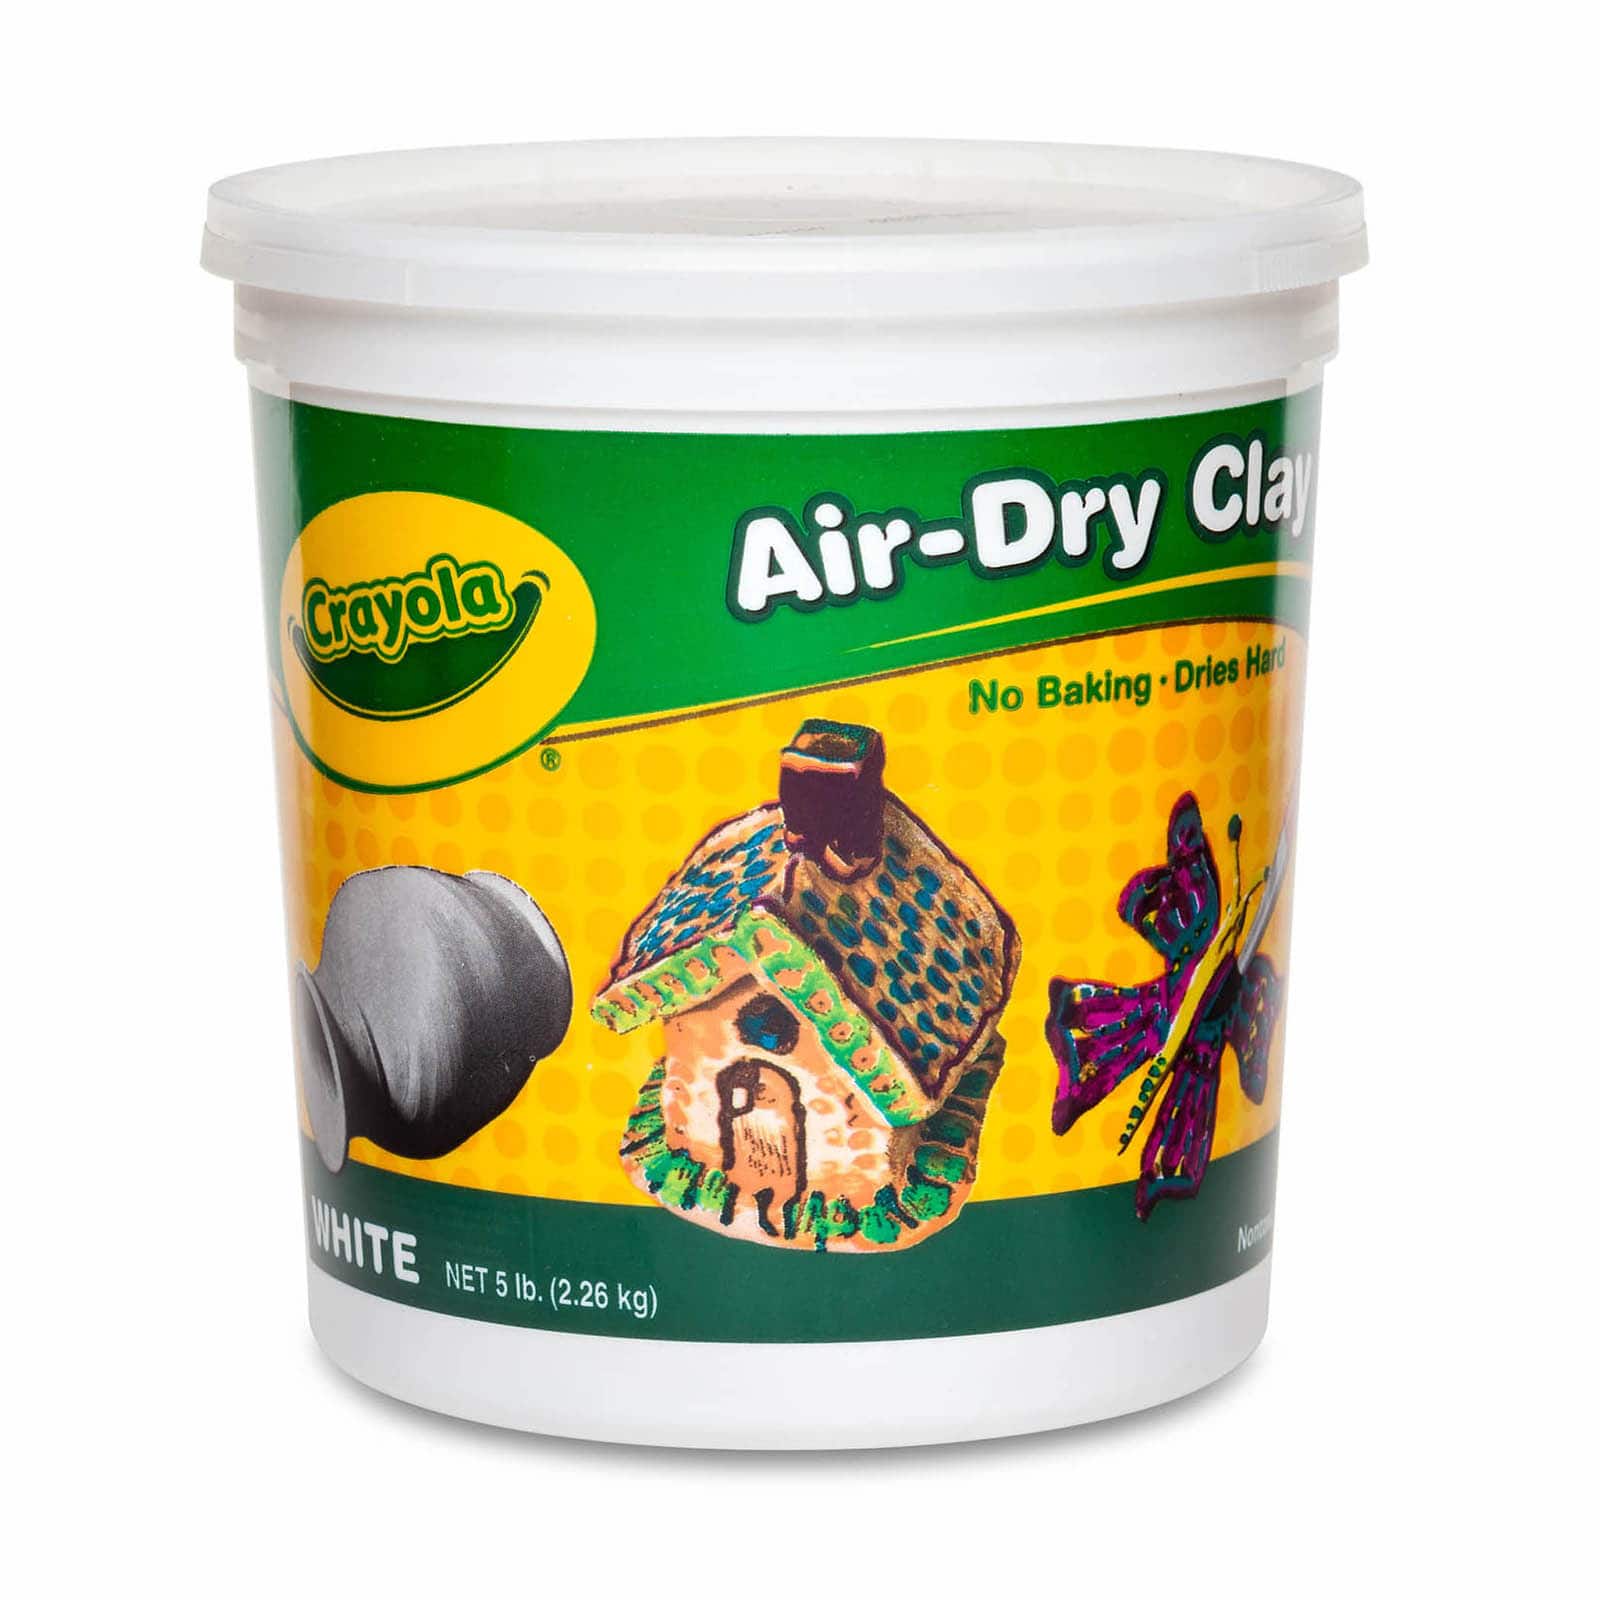 Crayola® 5lb. White Air-Dry Clay